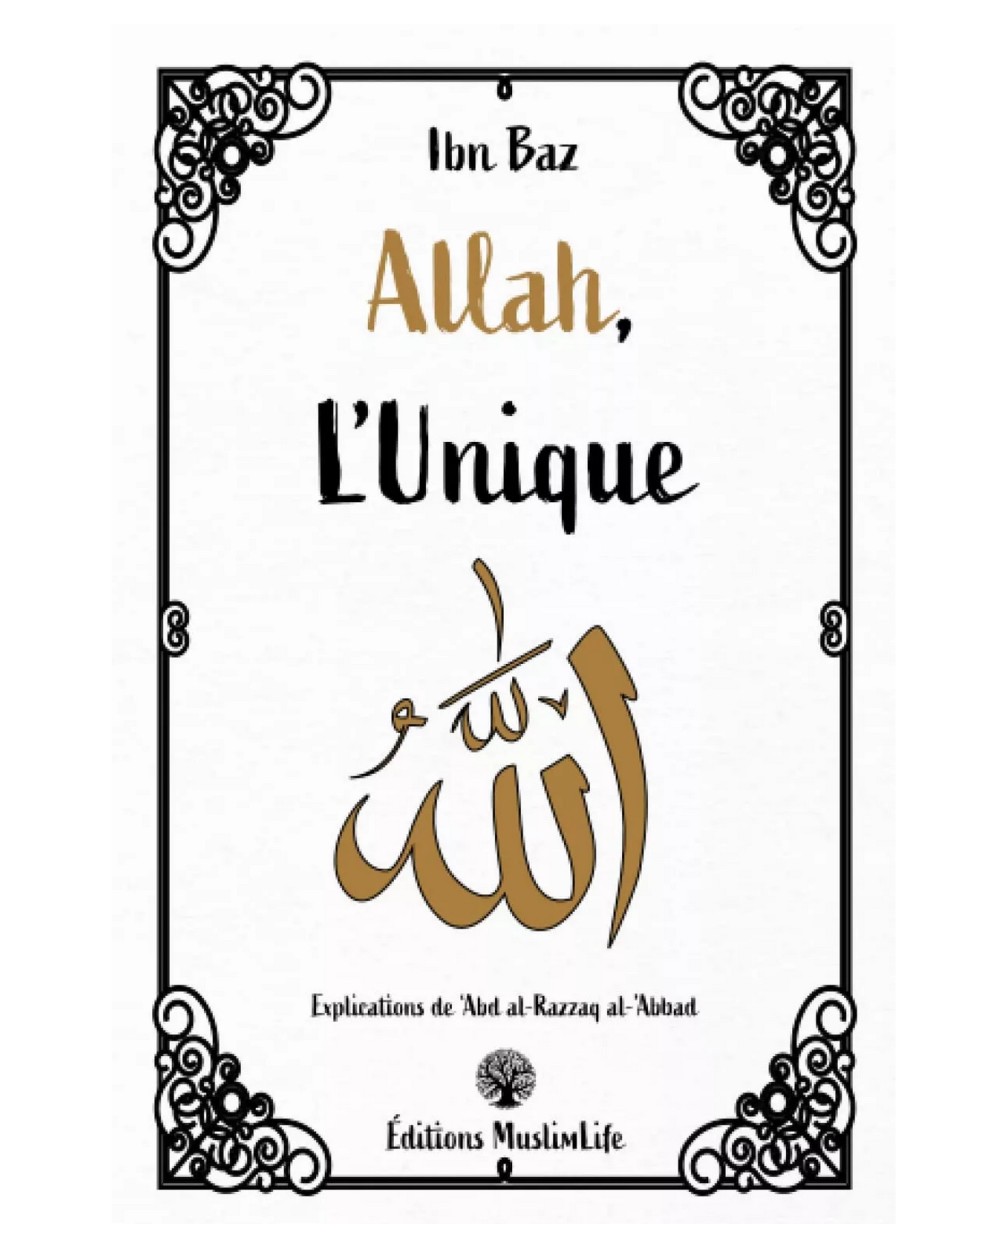 Allah the One - Sheikh ibn Baz - Muslimlife Edition